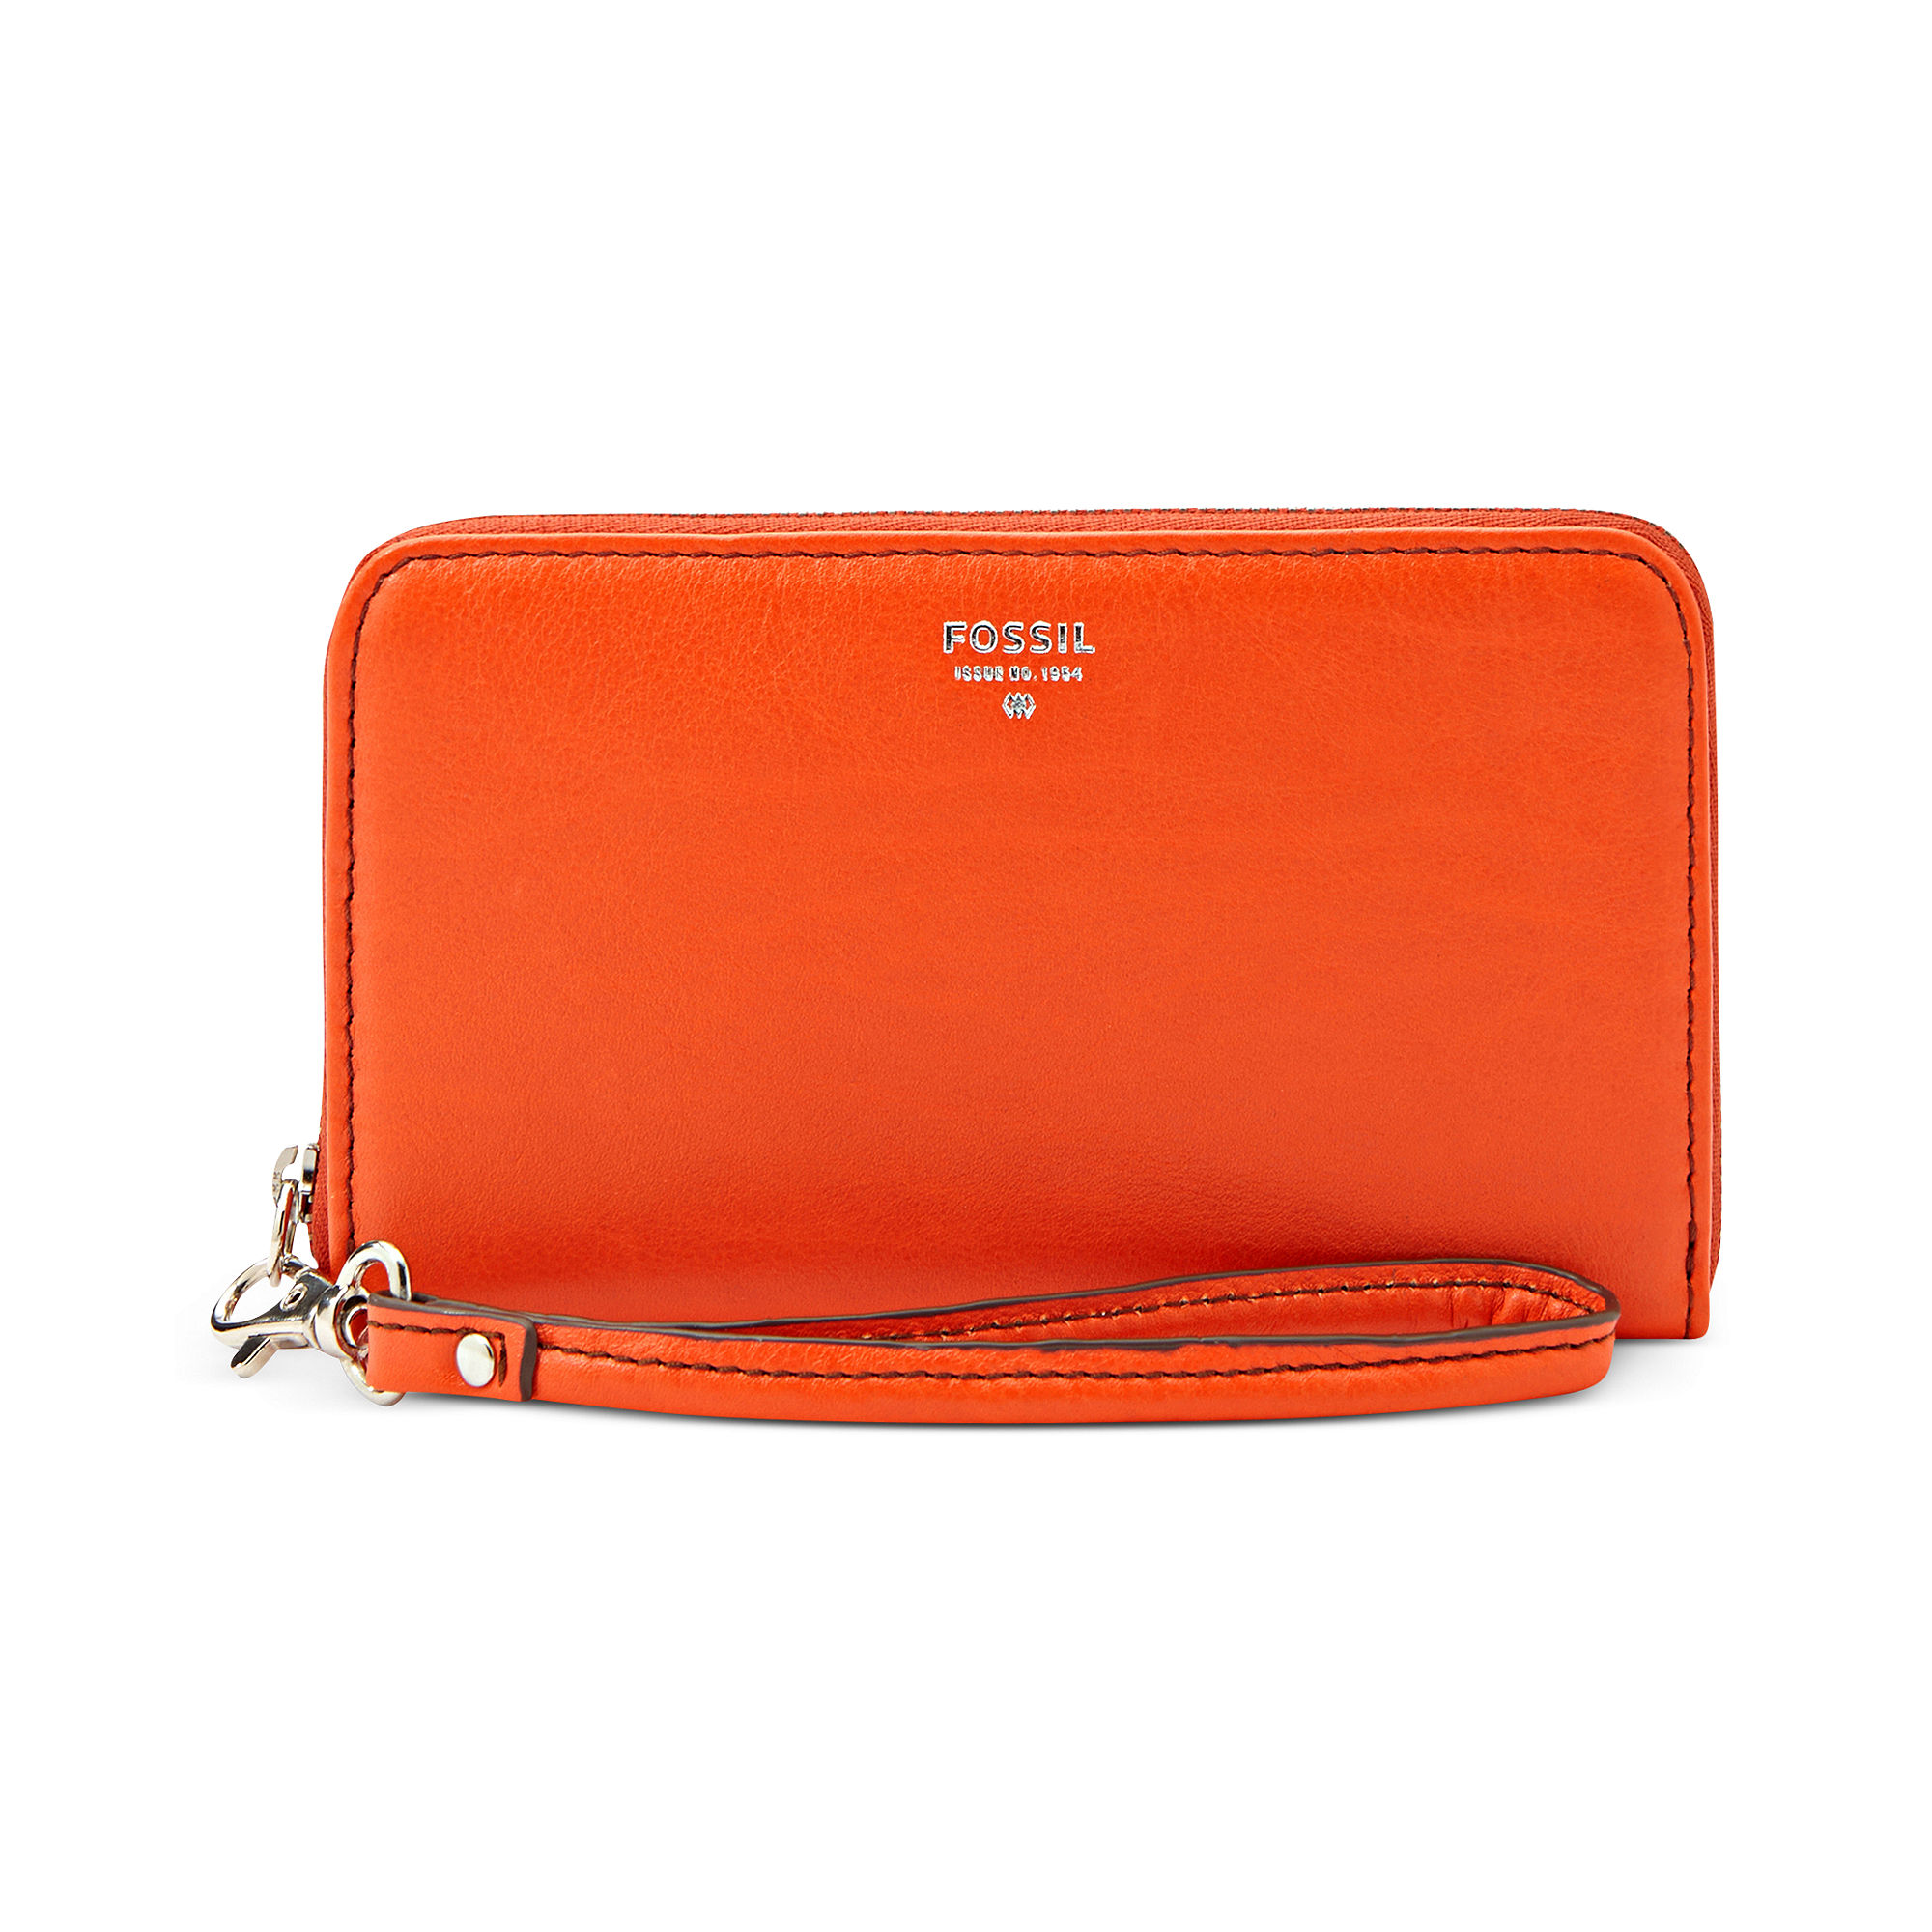 Fossil Sydney Leather Zip Phone Wallet in Magenta (Orange) - Lyst